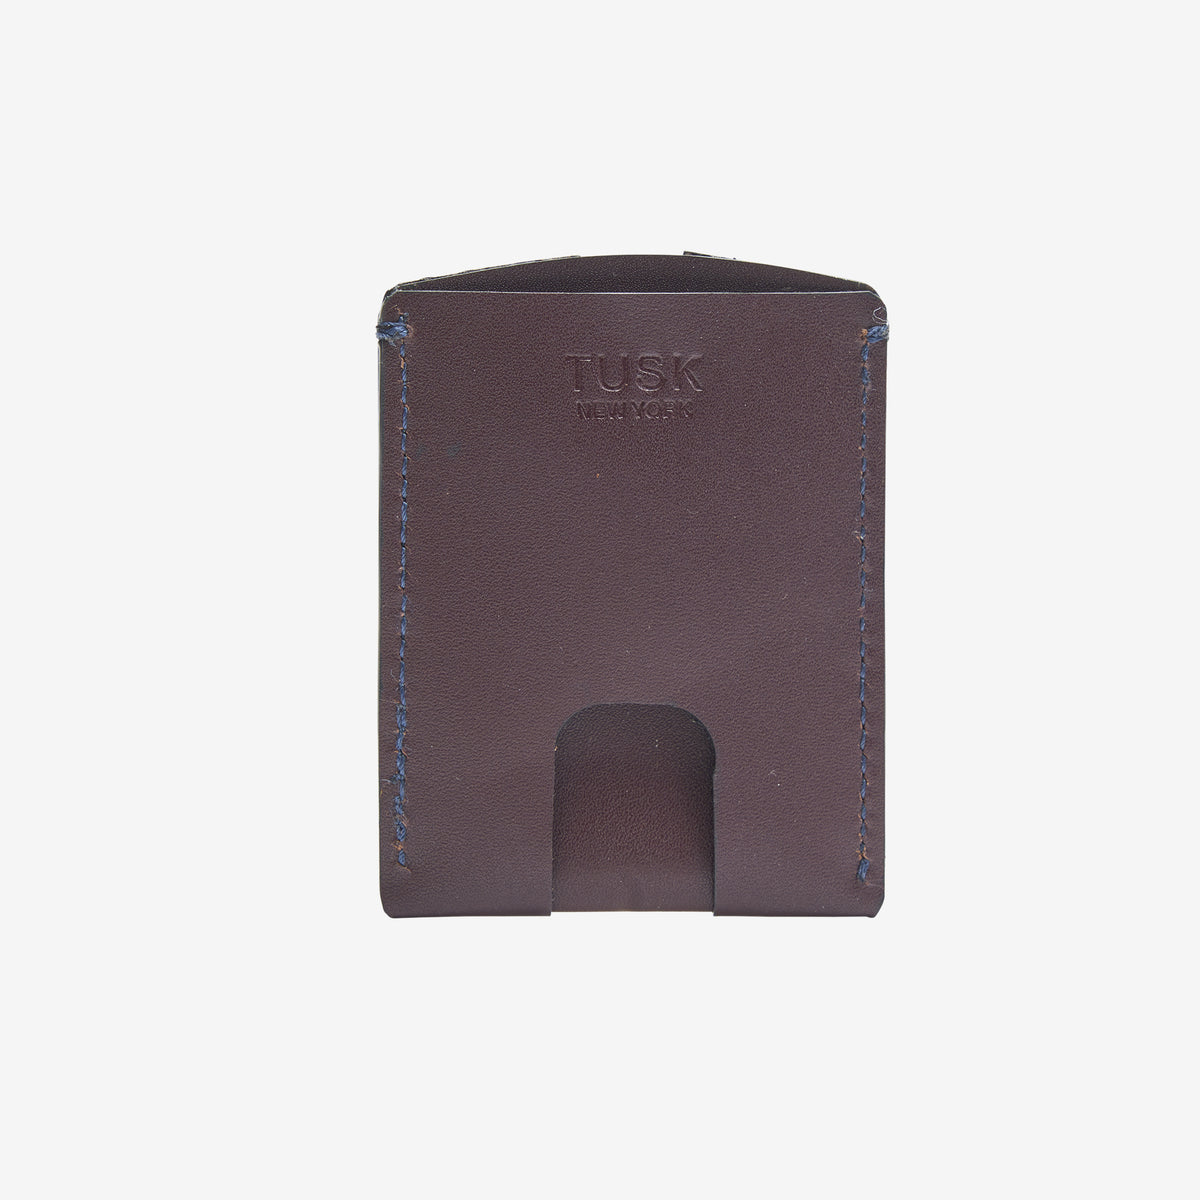 tusk-190-mens-leather-slim-slide-card-case-chocolate-front